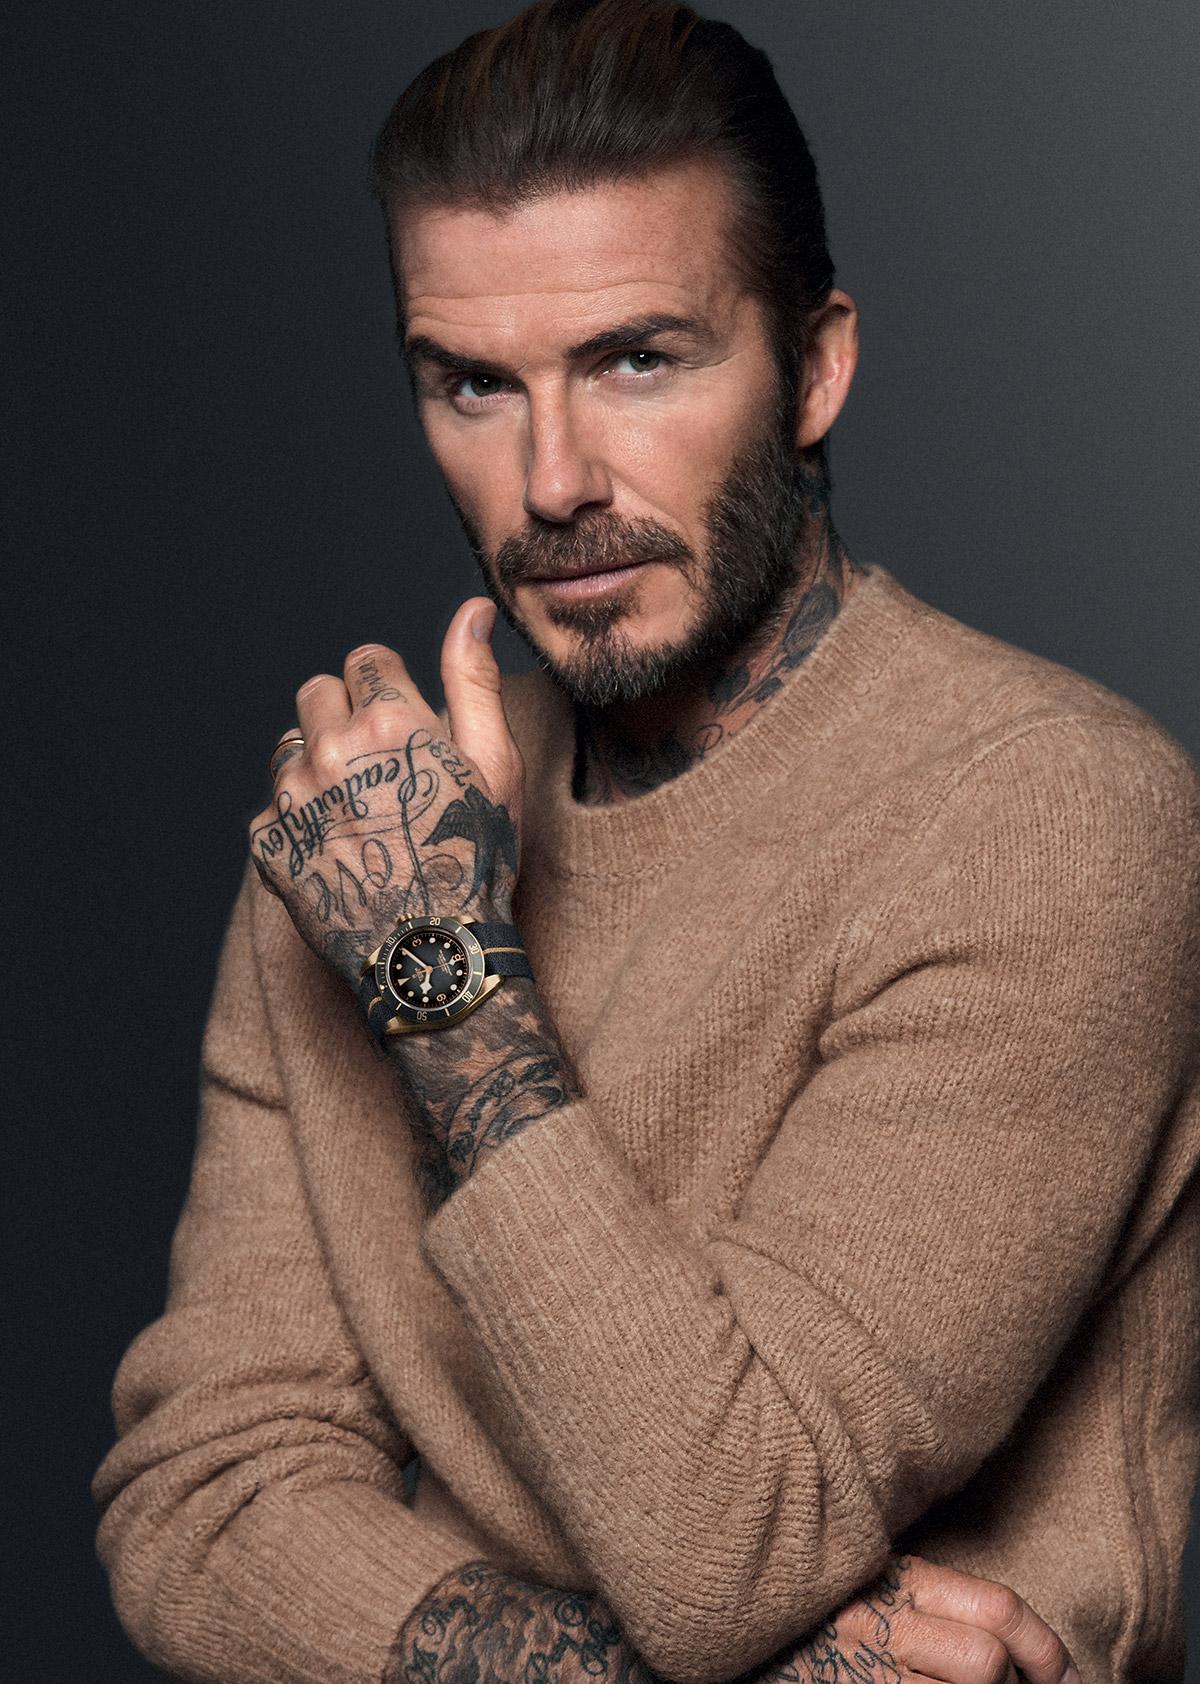 David Beckham with a Tudor watch on his wrist